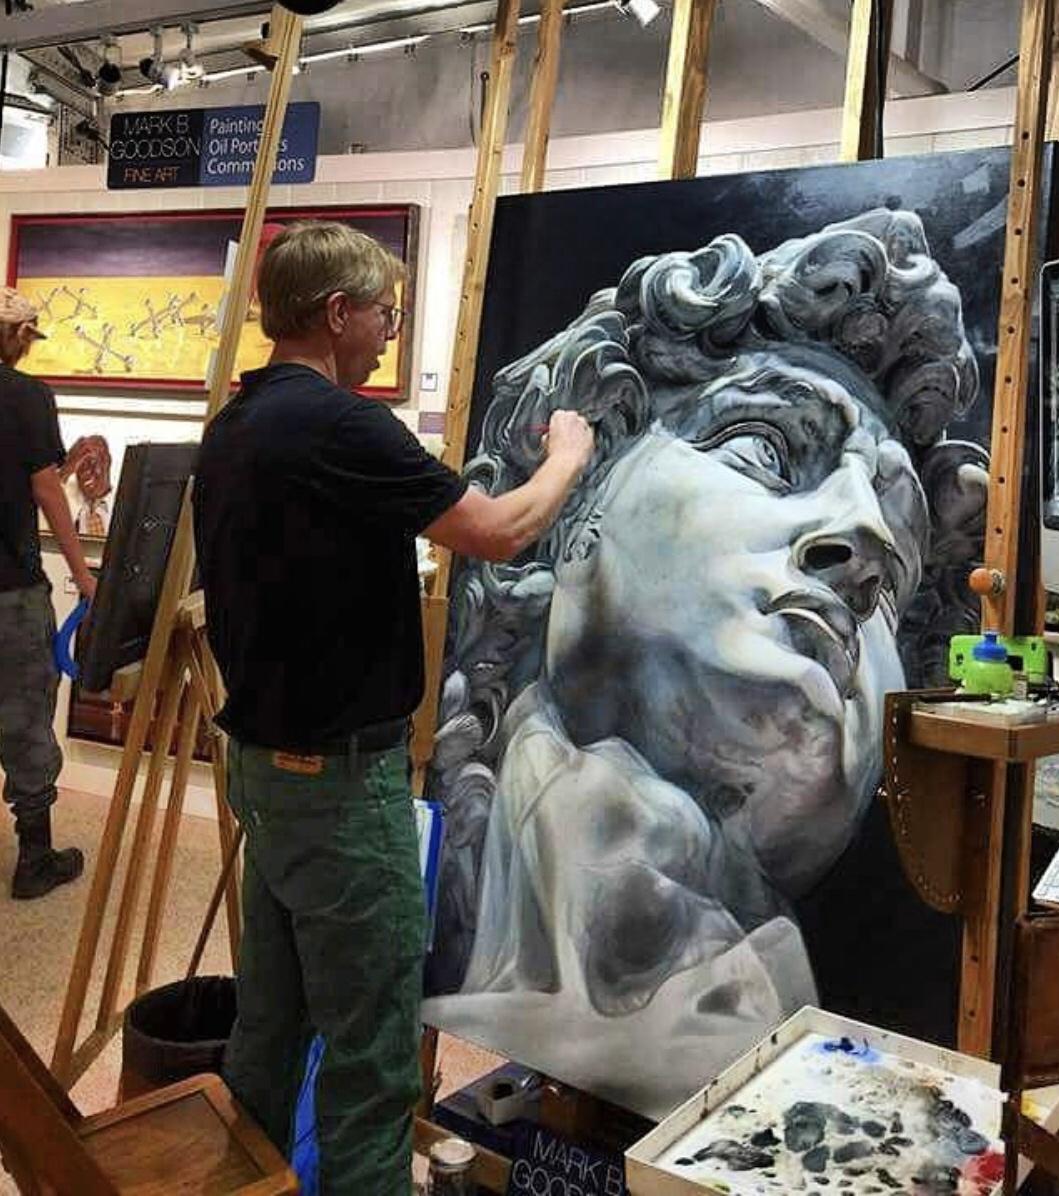 statue of david painting - Maswb Painting Goodson Ot Portis Commons Market